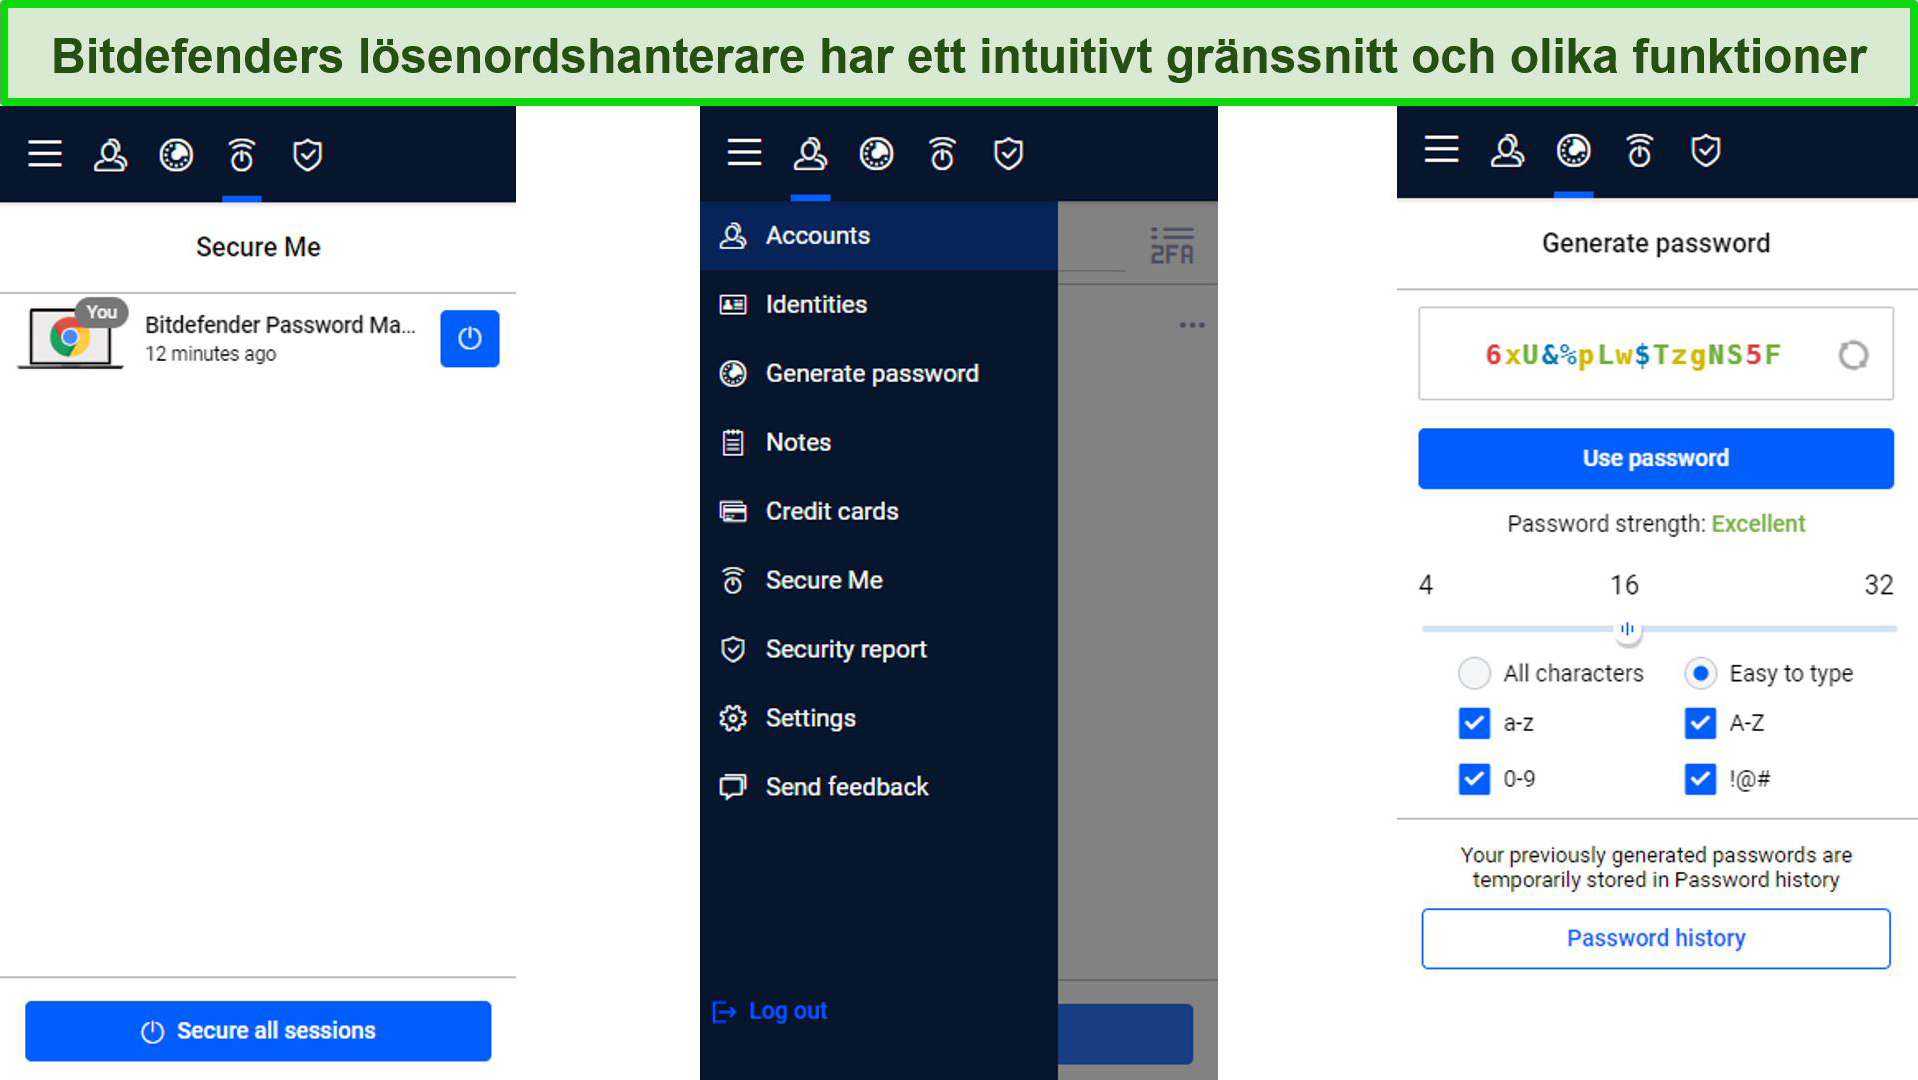 Screenshot of Bitdefender's password manager interface